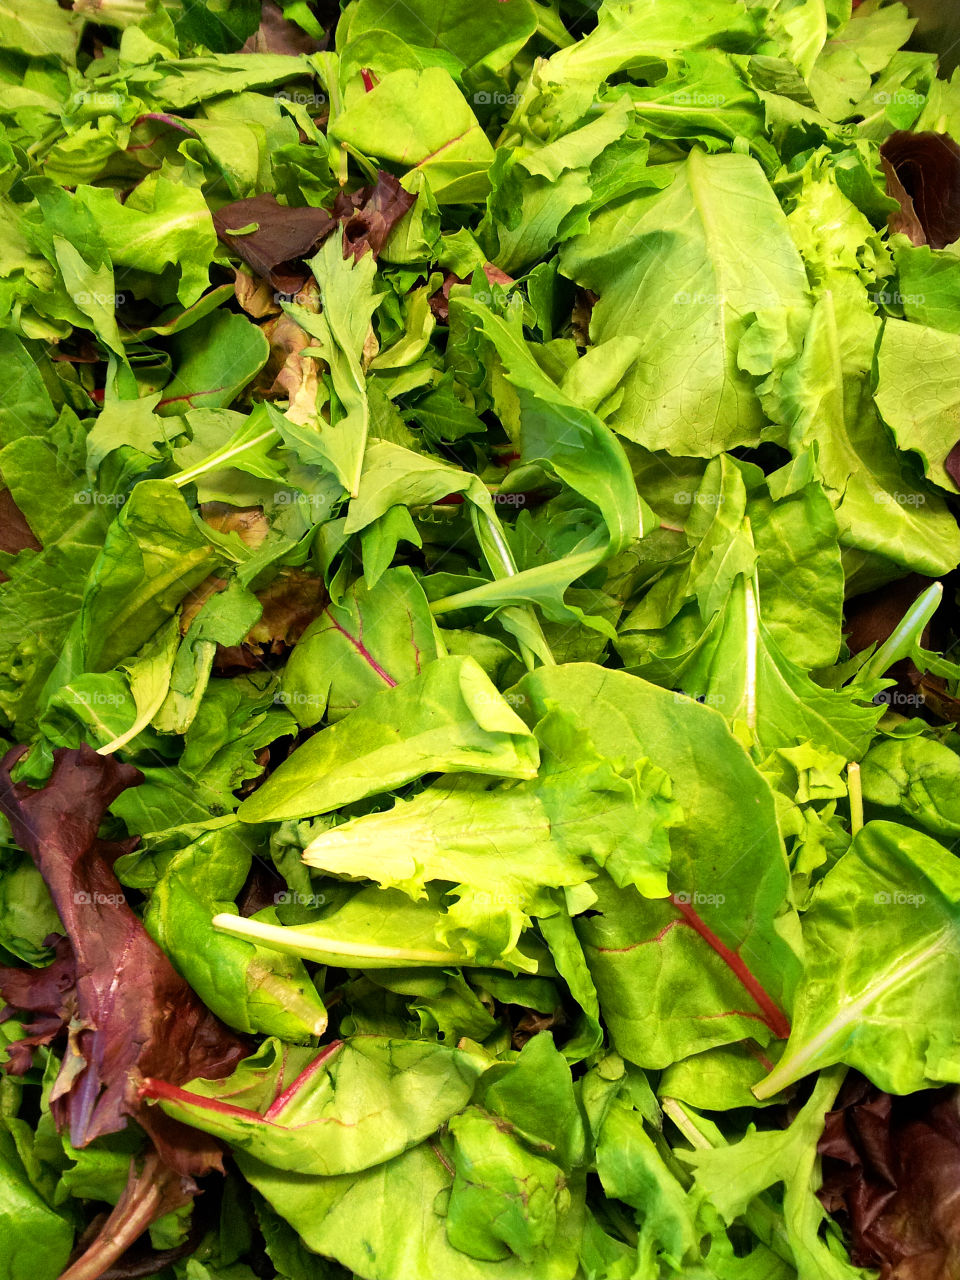 Lettuce fresh organic and green